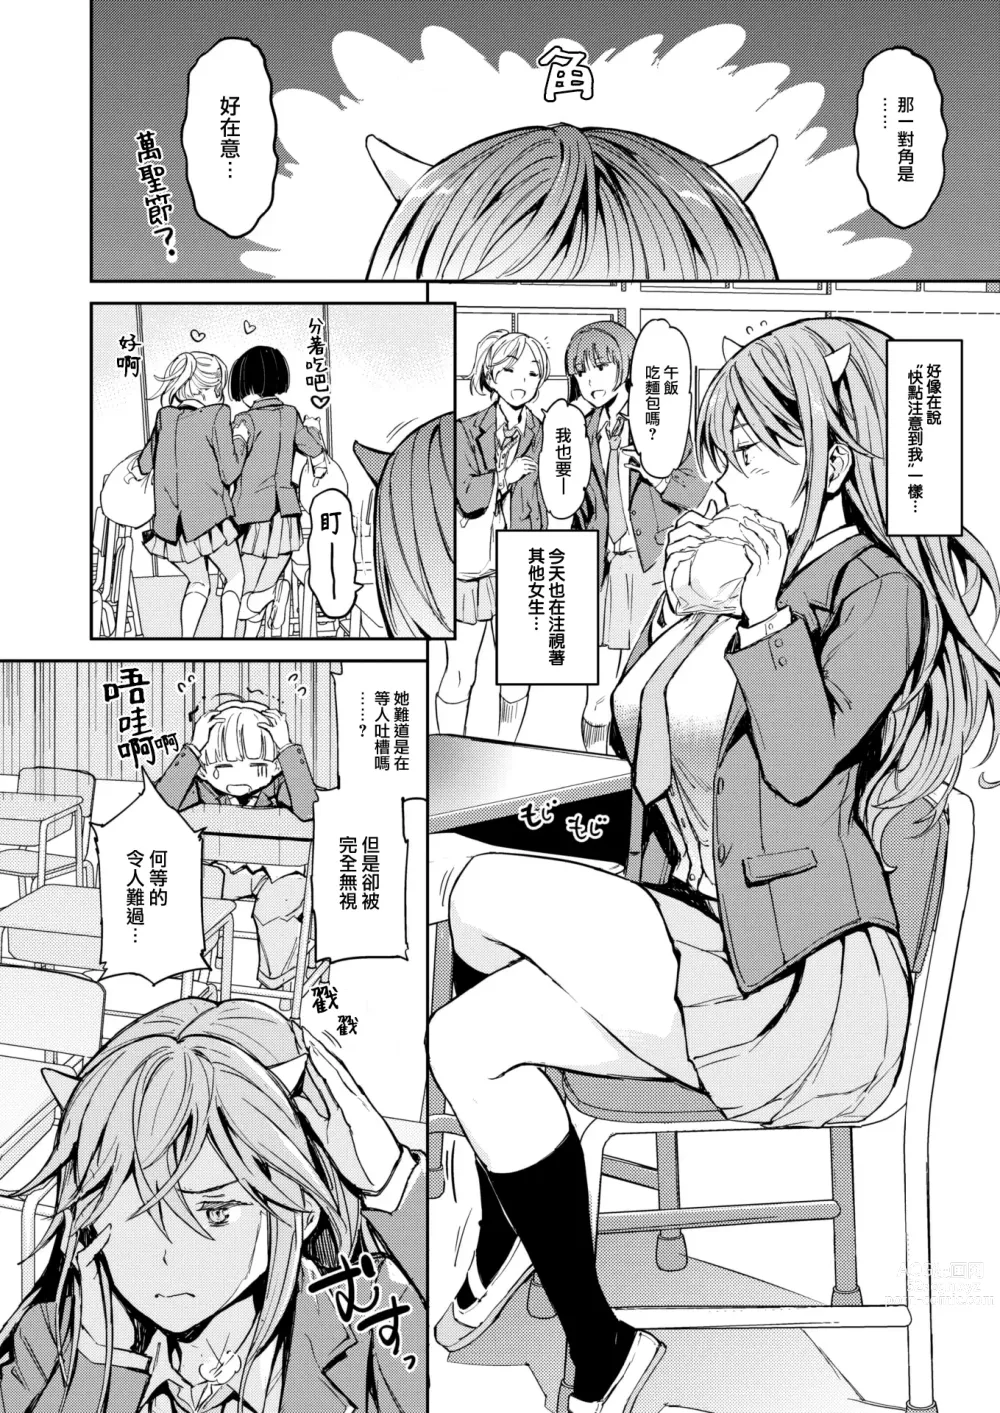 Page 3 of manga Akuma ga Kitarite